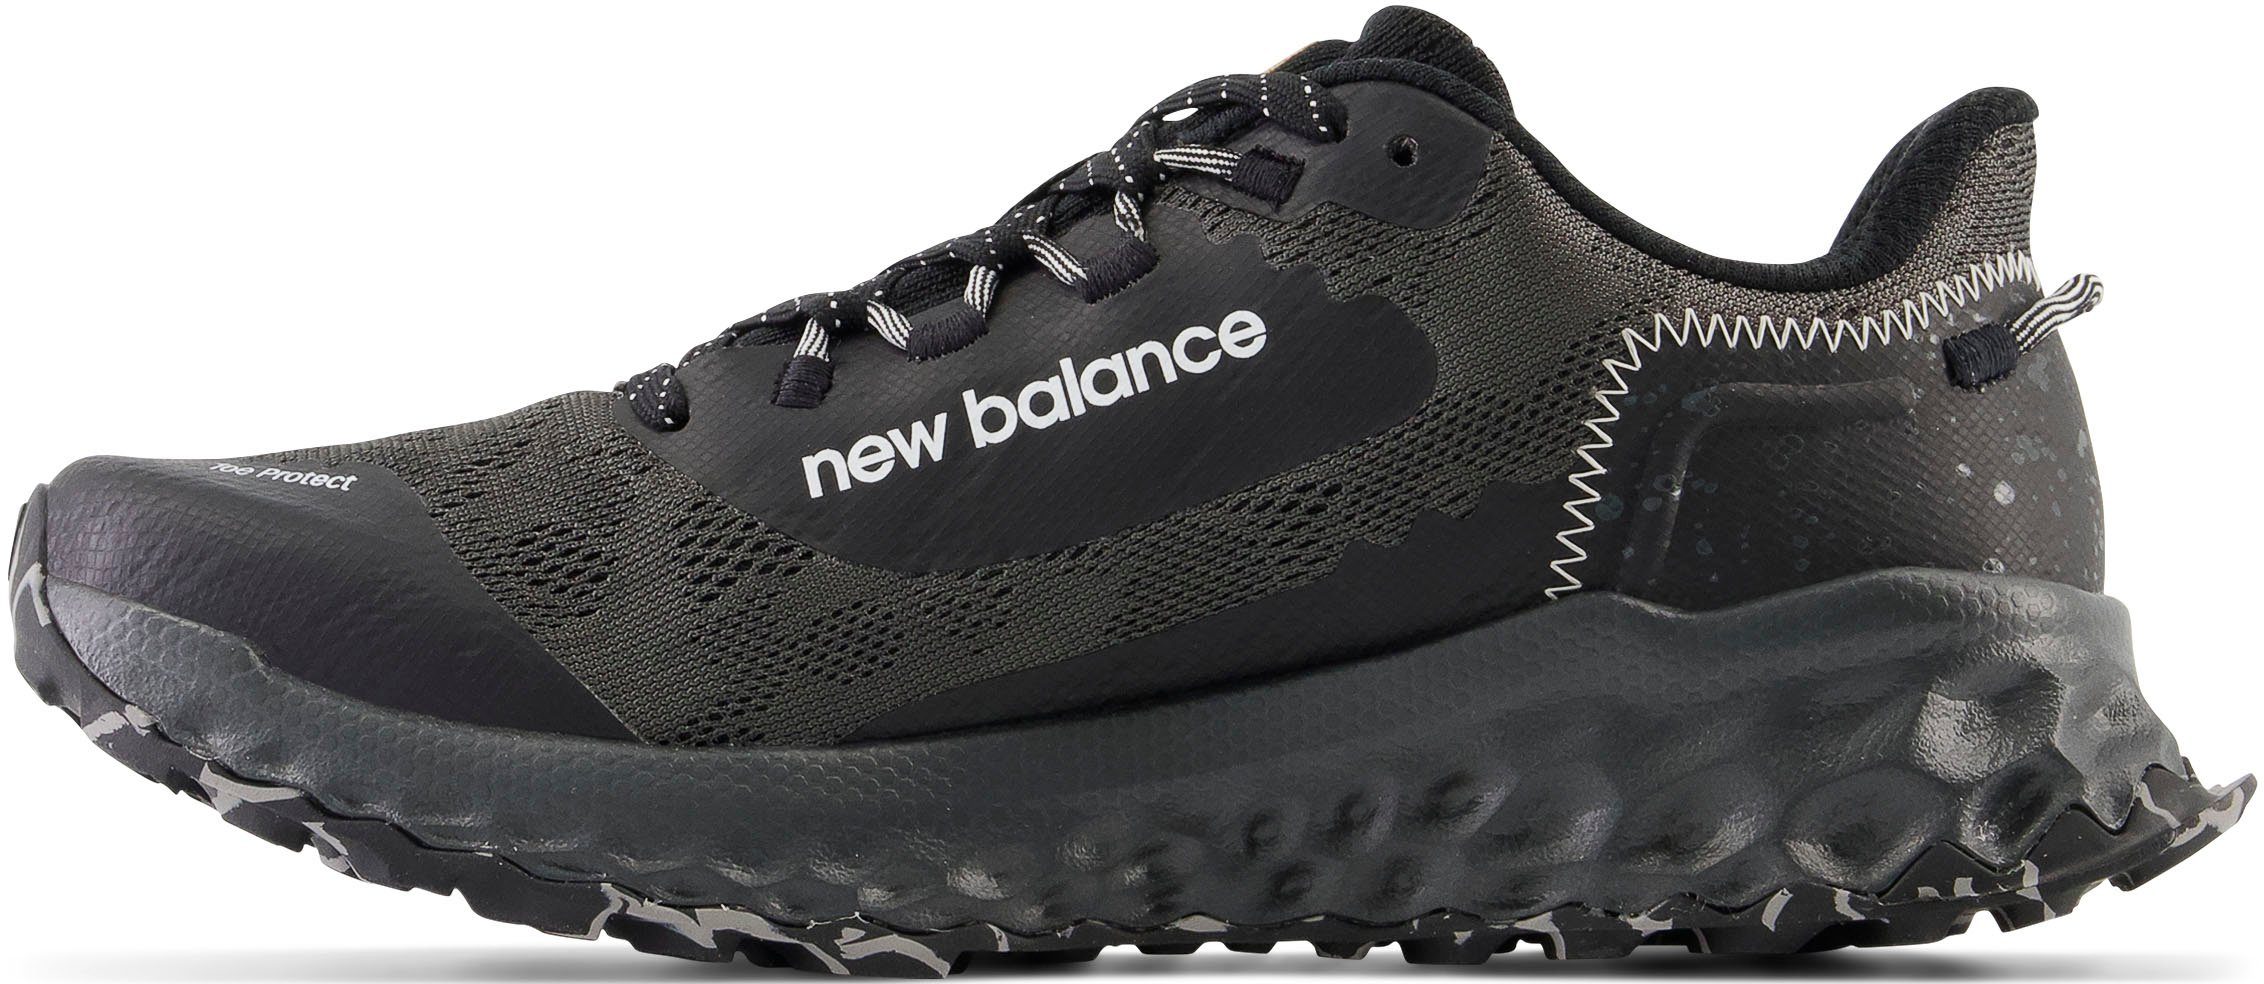 Trailrunningschuh schwarz-grau Balance GARO New